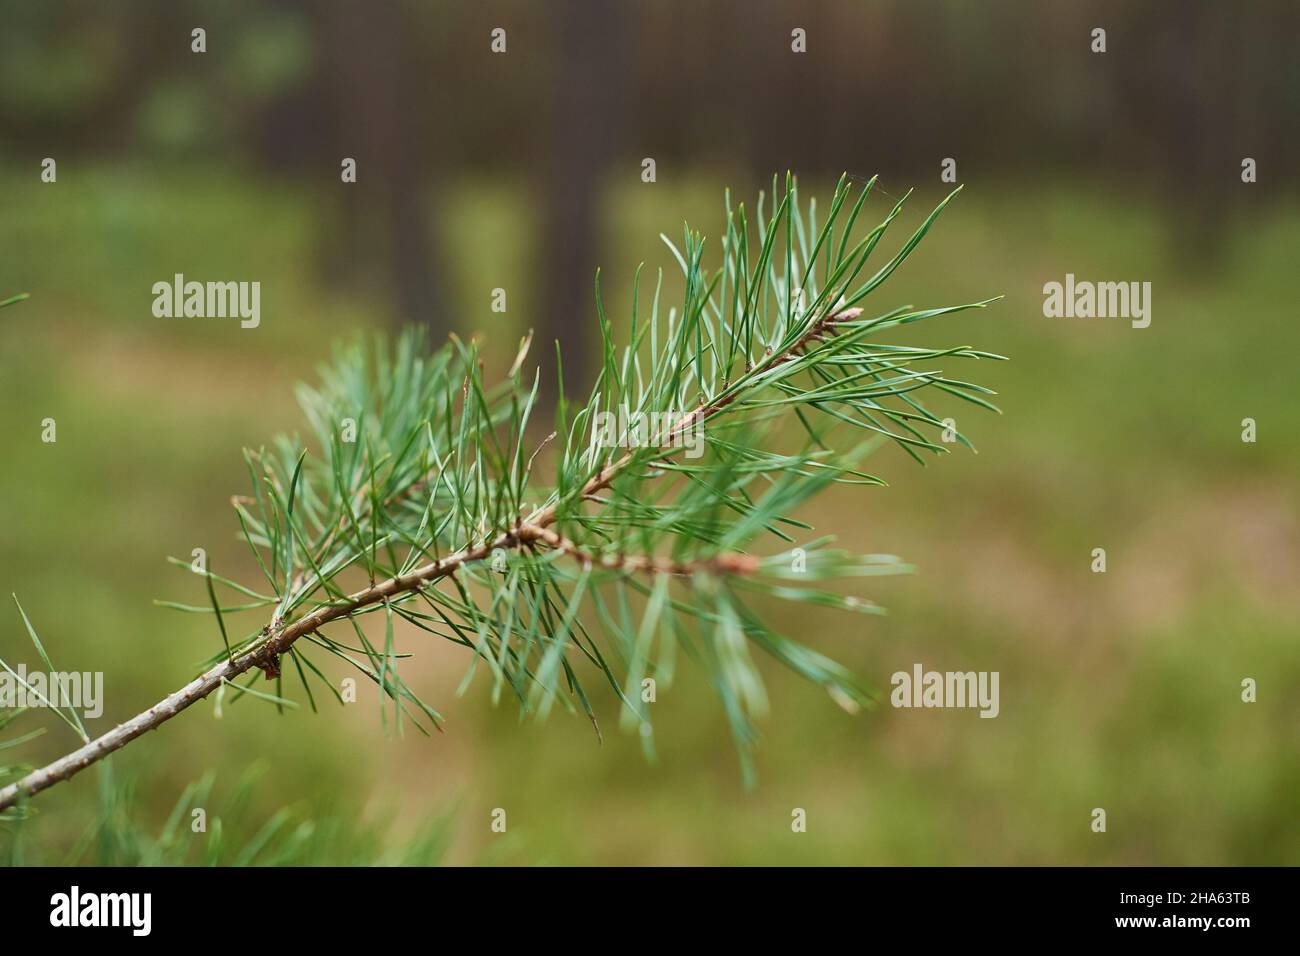 young scots pine (pinus sylvestris),branch,twig,needles,bavaria,germany Stock Photo